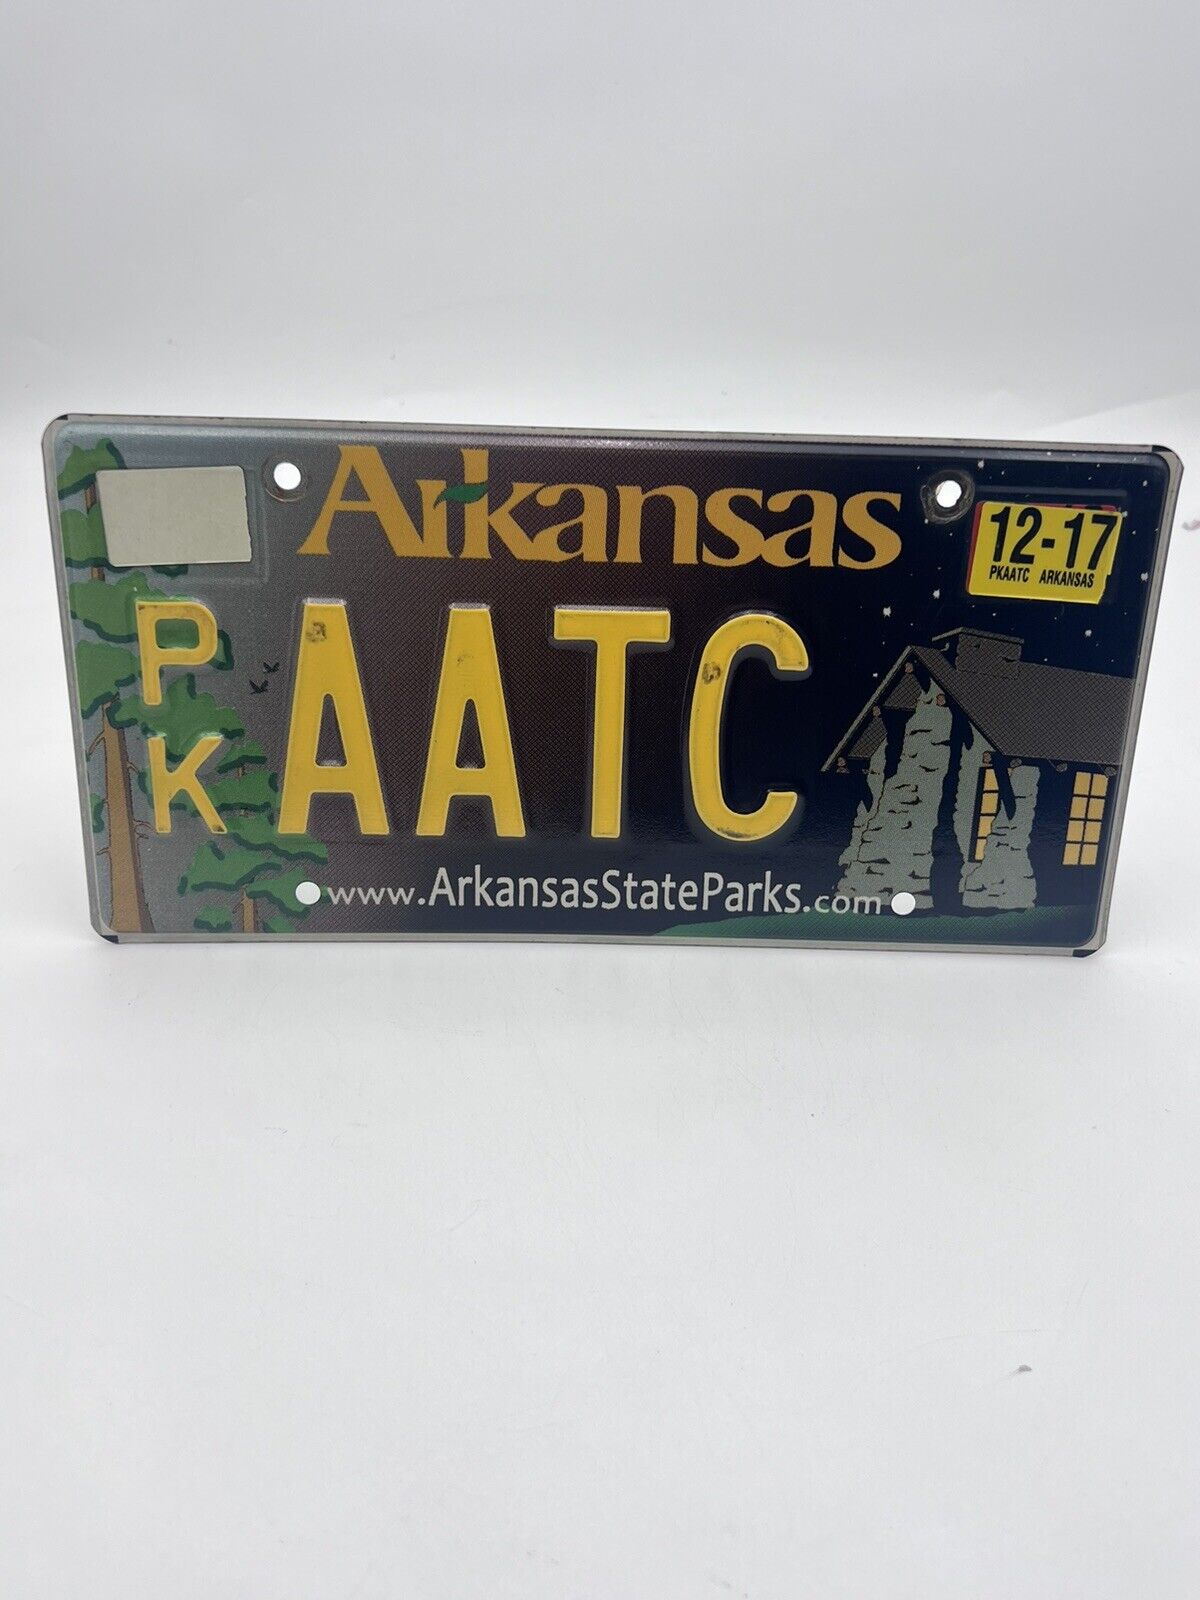 Arkansas License Plate Vanity Tag Sign Razorback State Park Cabin Forrest AATC